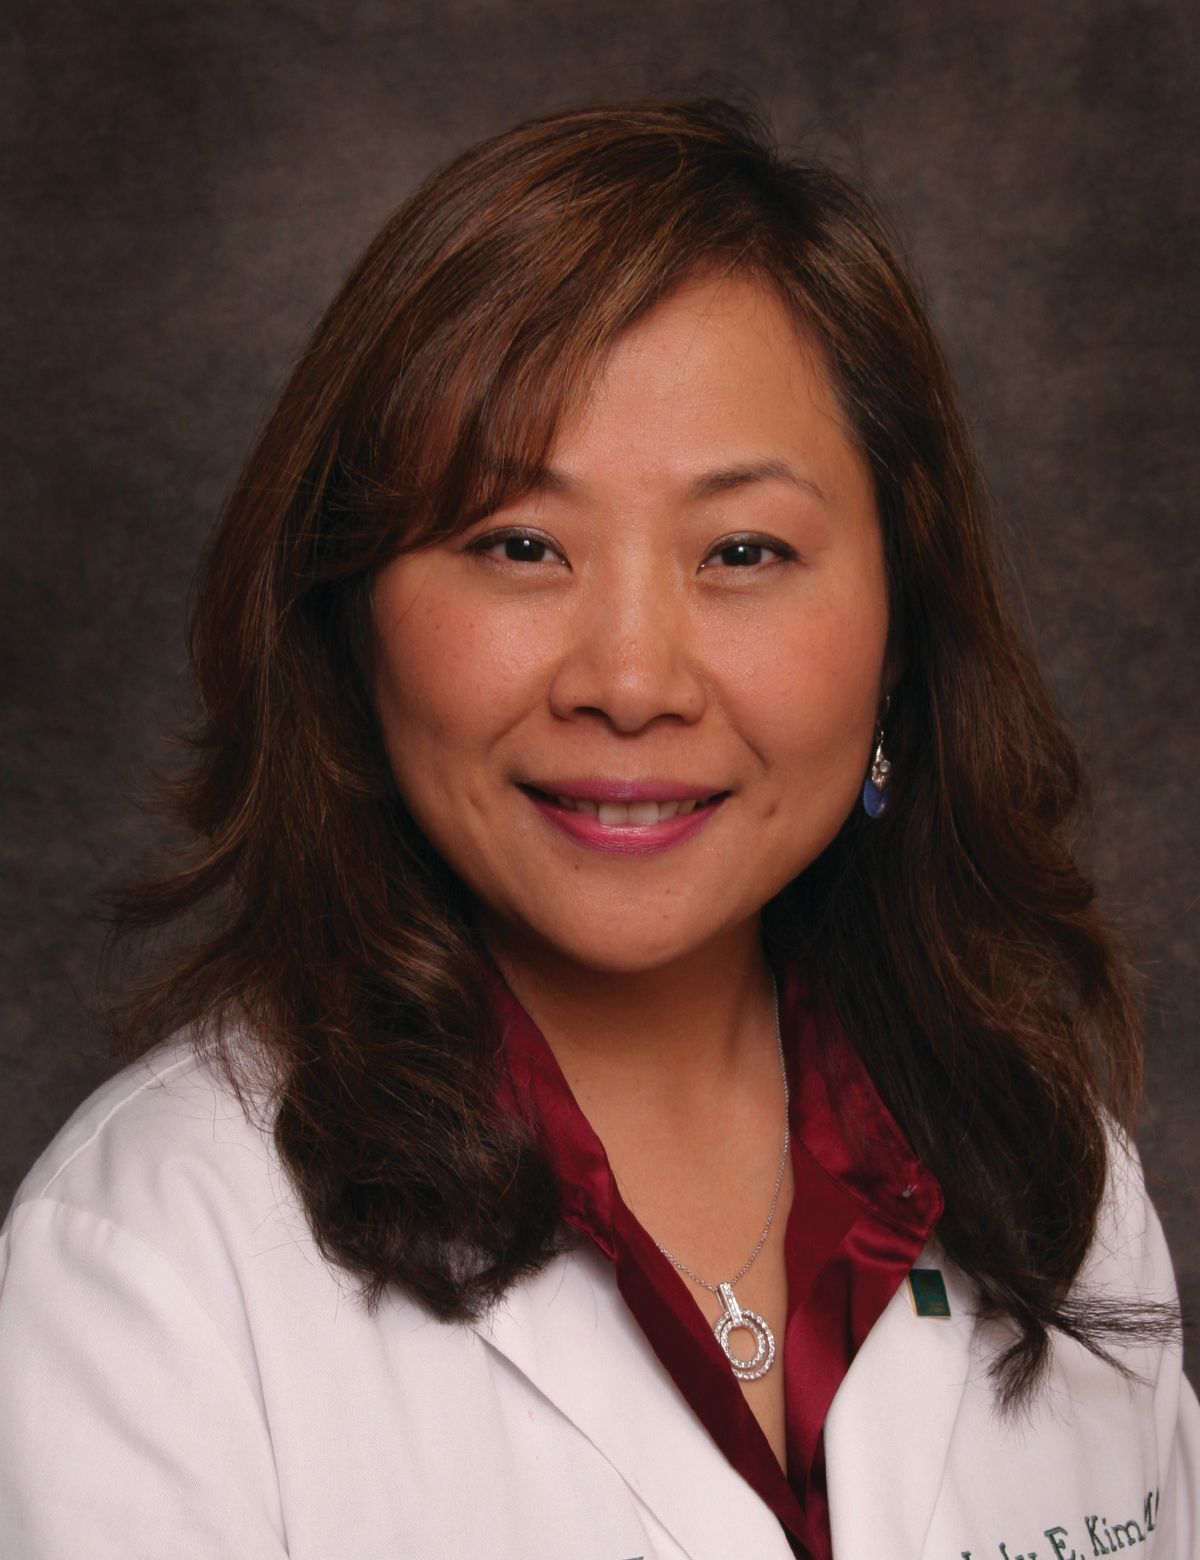 Judy Kim, MD, Program Chair